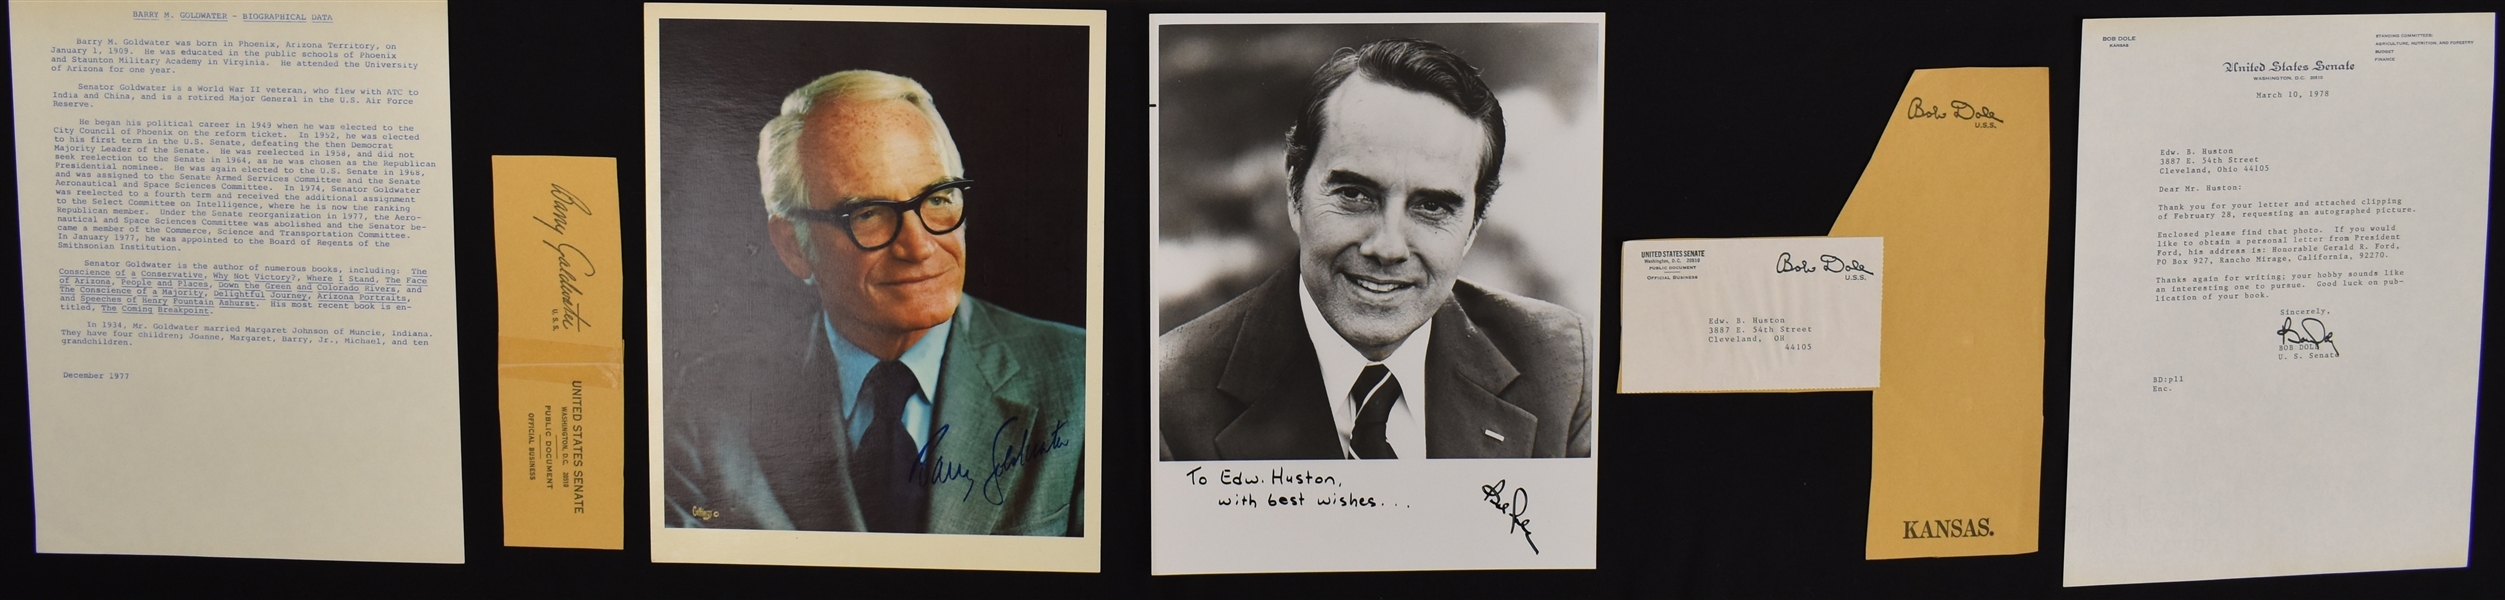 Bob Dole Autographed Photo & Letter w/Barry Goldwater